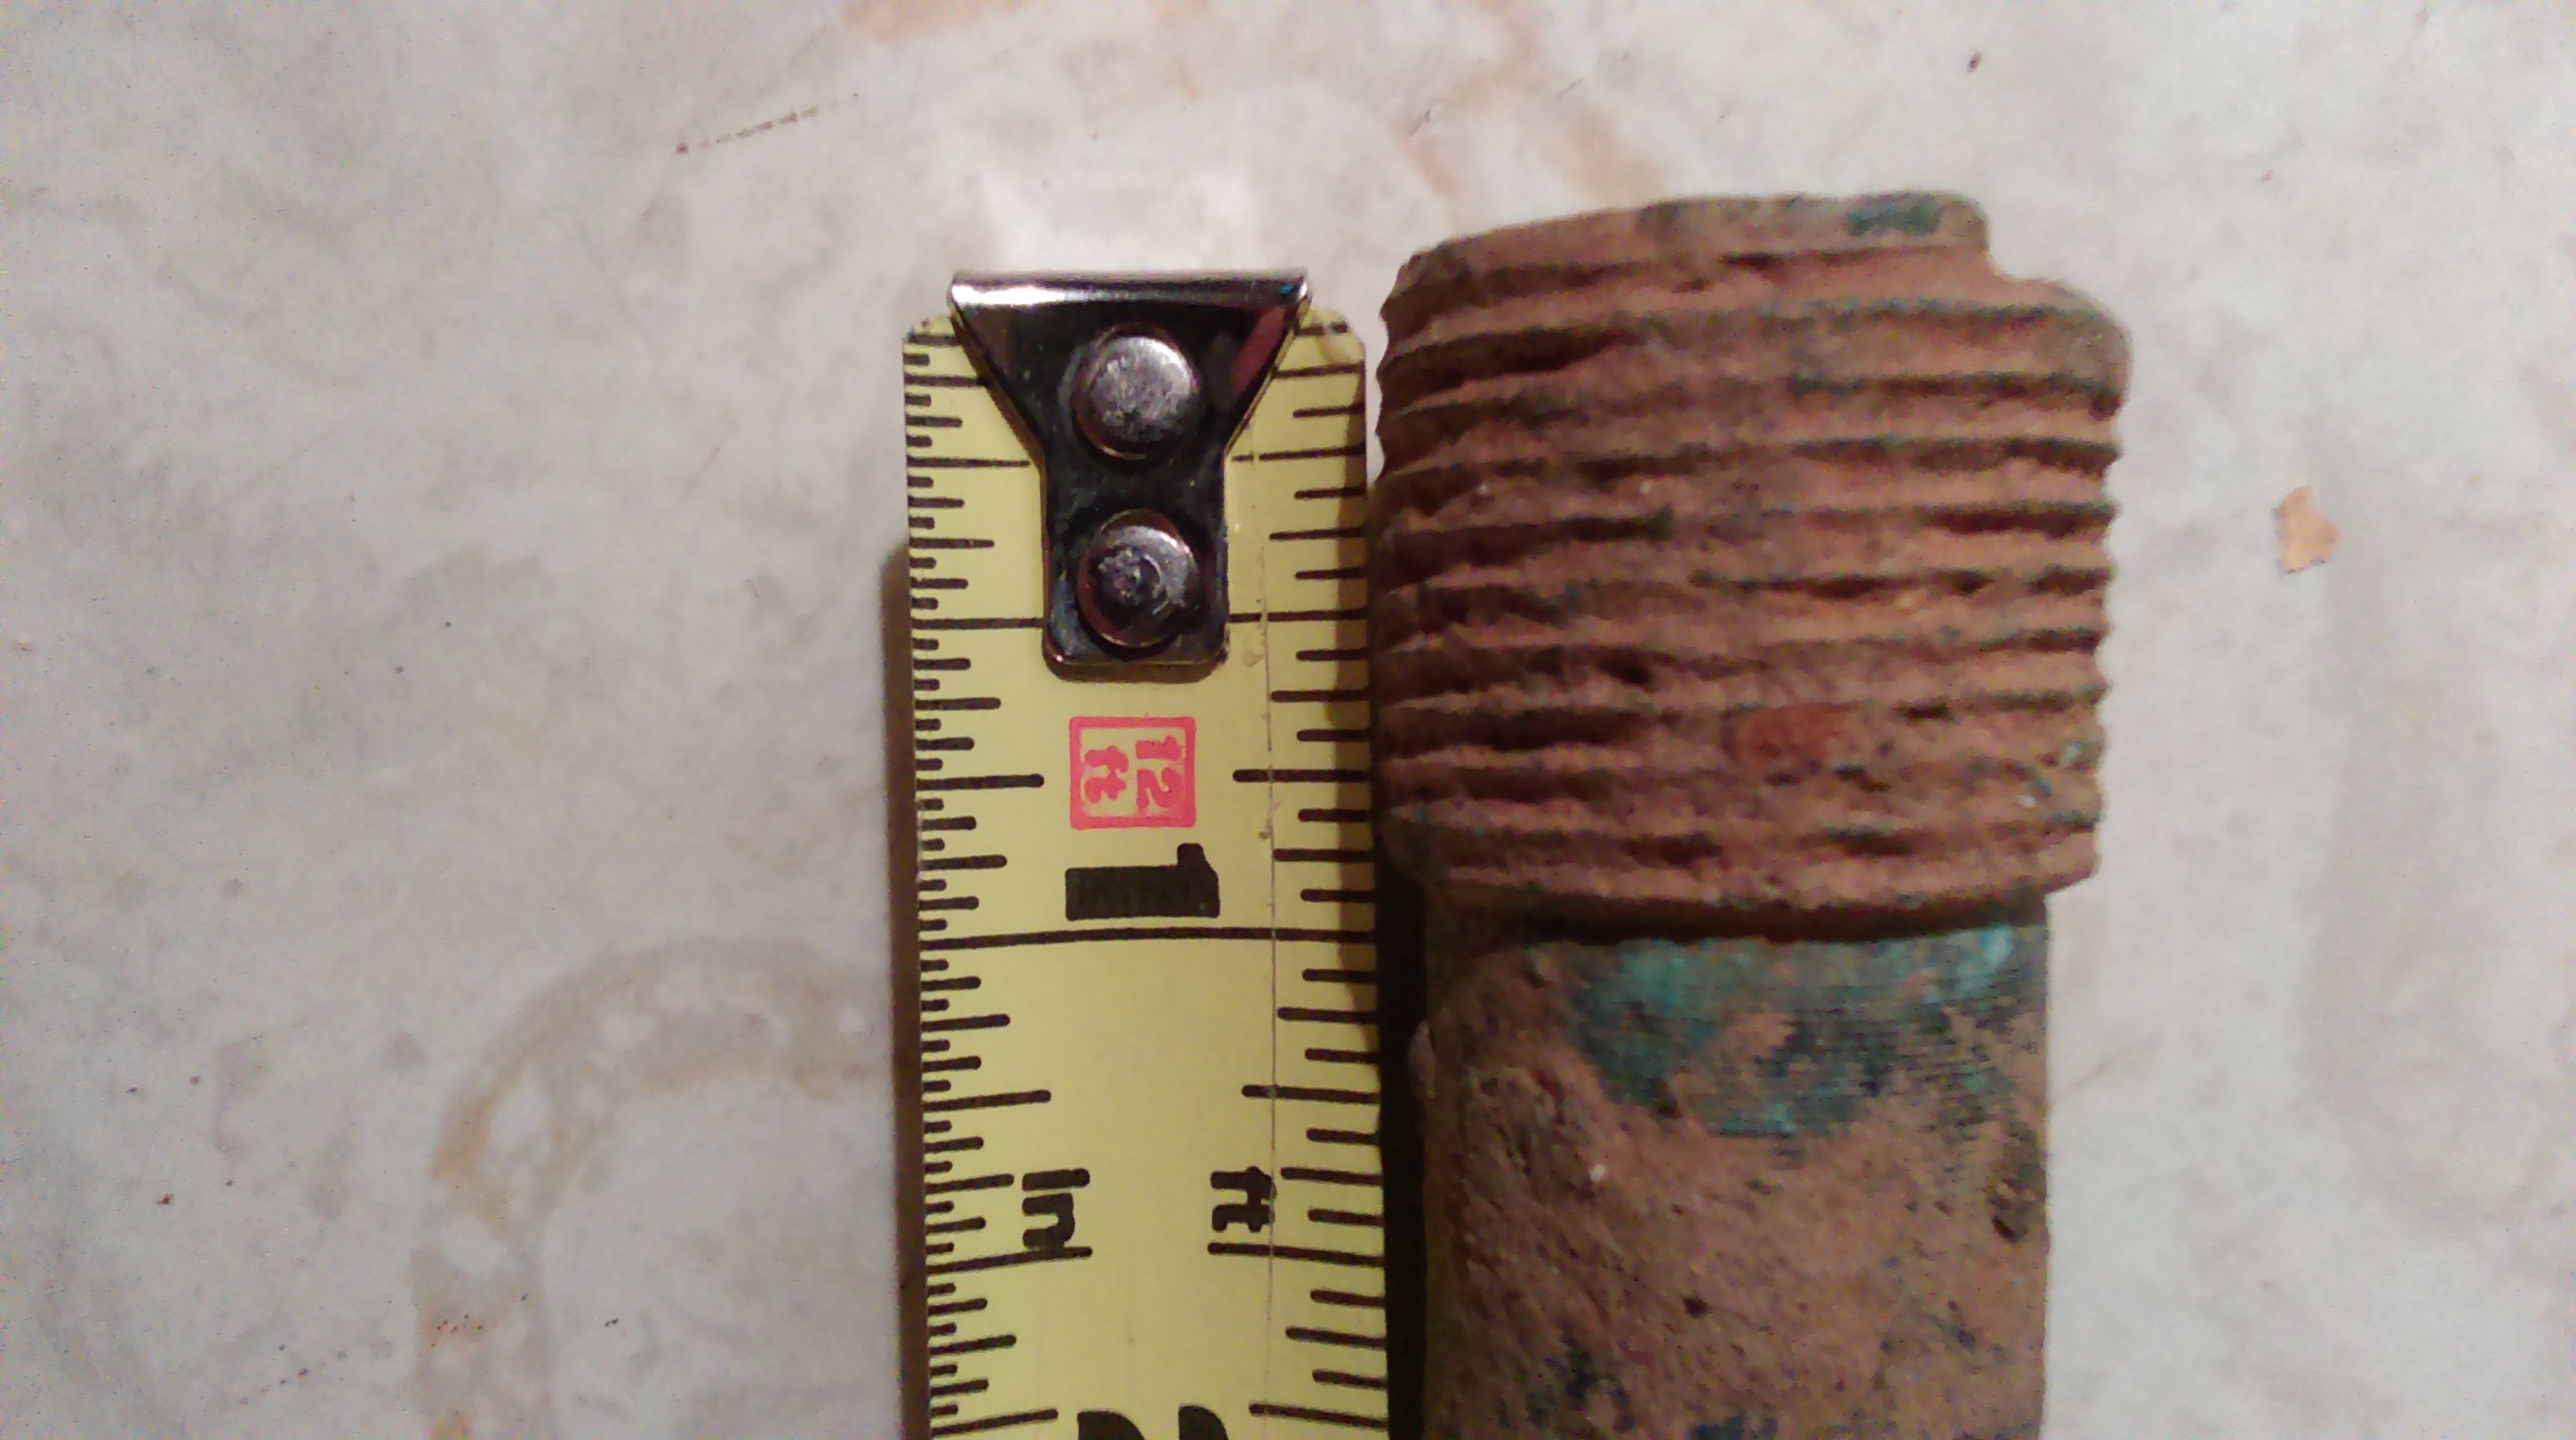 IMAG0611 Hotchkiss Fuse from a 65 lb Naval Gun Shell.
Found 2016